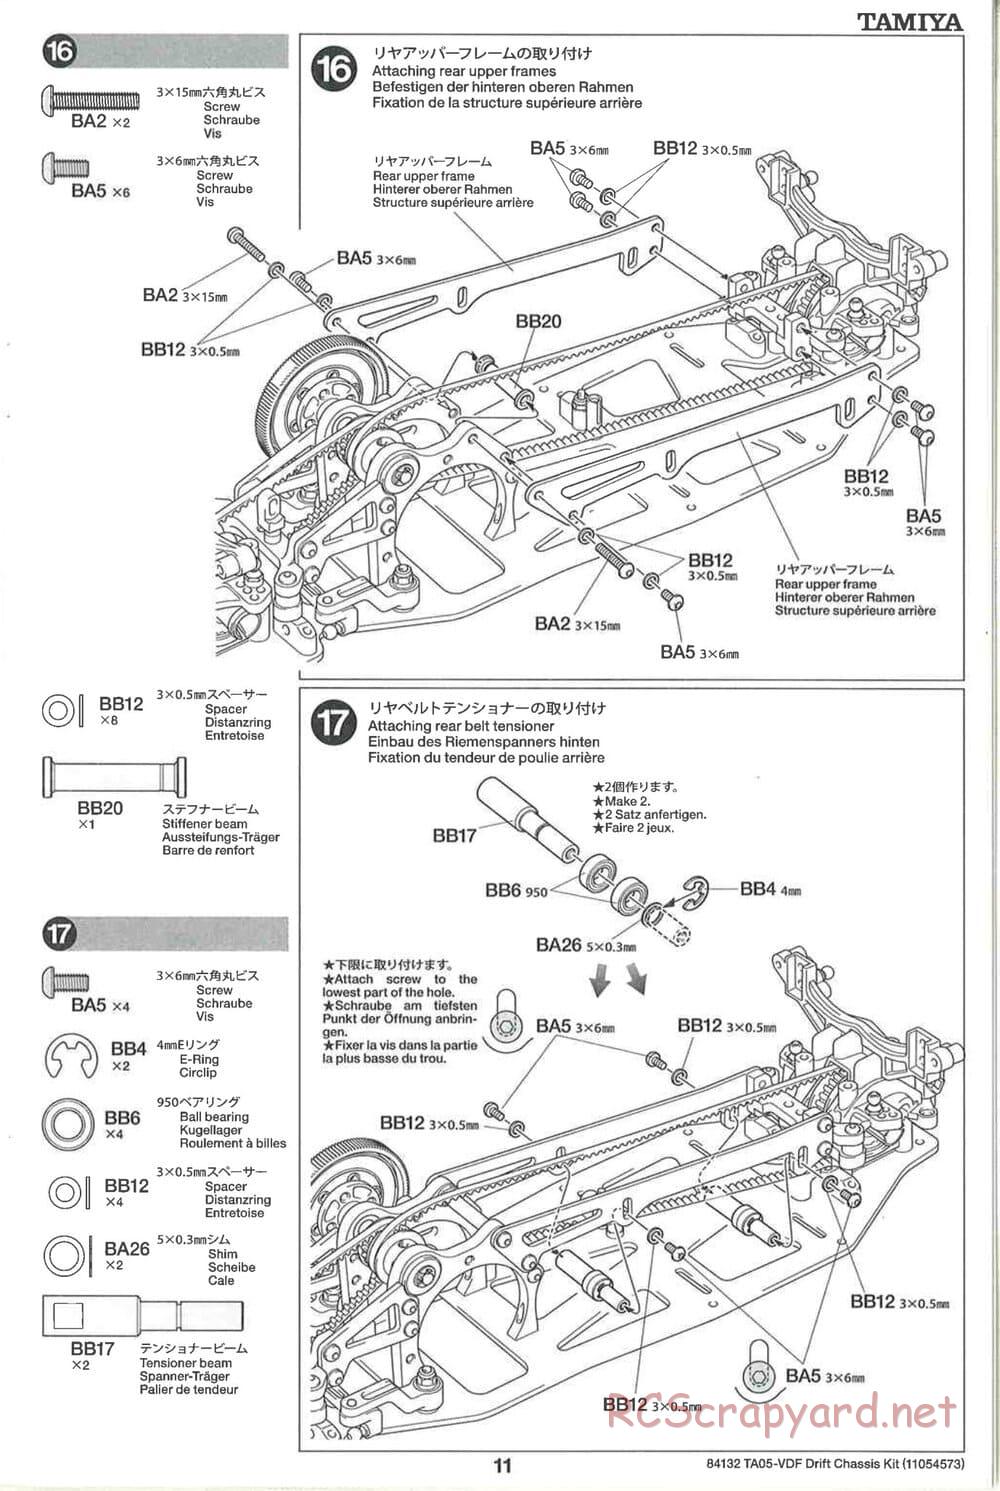 Tamiya - TA05-VDF Drift Spec Chassis - Manual - Page 11